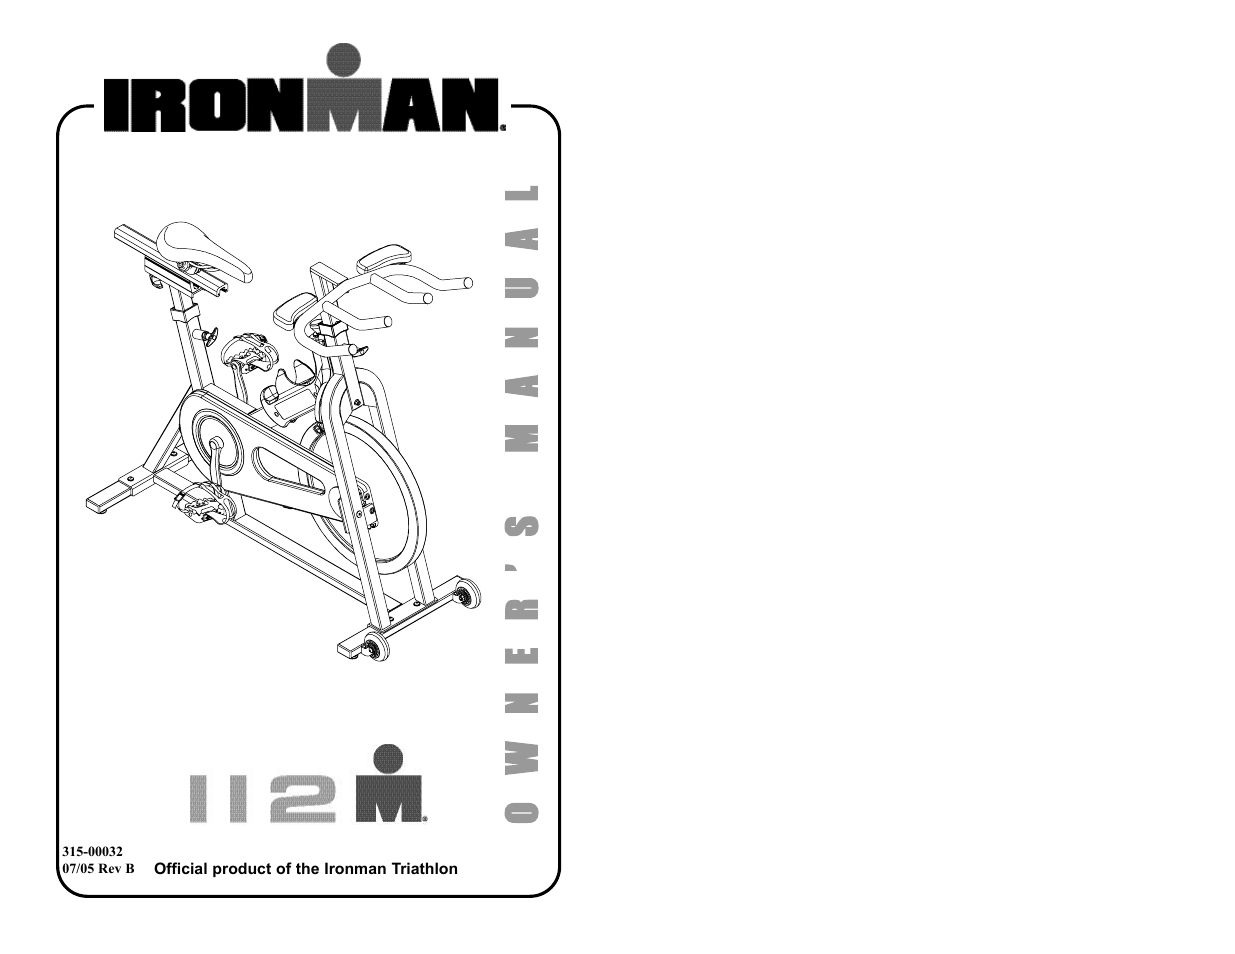 Ironman 112M